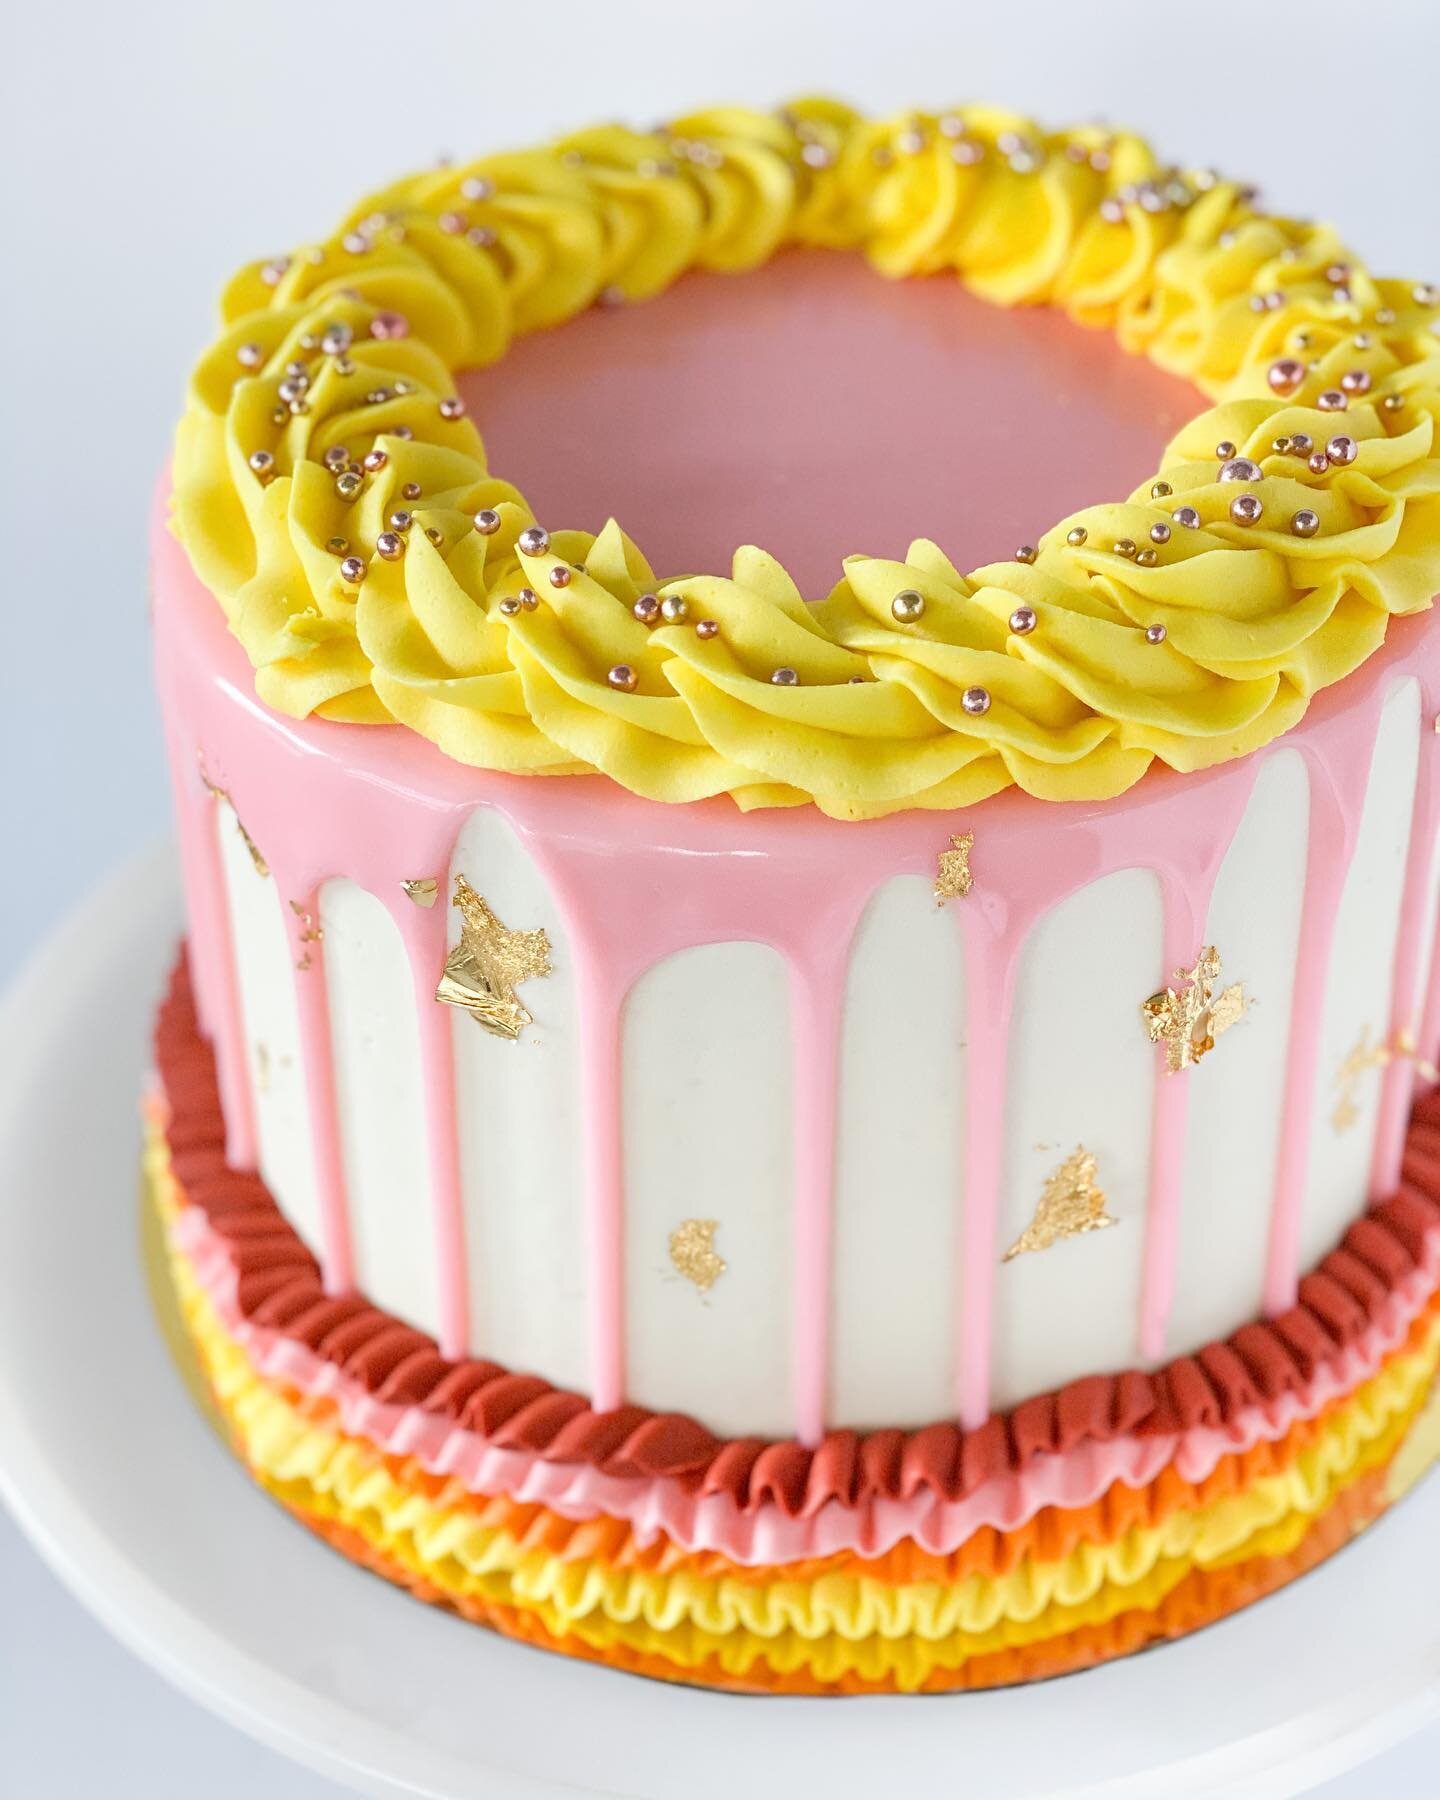 Something fun and bright 💗✨
.
.
.
.
.
#cakesofinstagram #cakeart #cakeinspo #cakesdaily #cake #instacake #cakegoals  #dailyfoodfeed #cakestyle #caketrends #cakeoftheday #cakedecorating #buzzfeed #cakedesign #eeeeeats #cakegram #birthdaycake